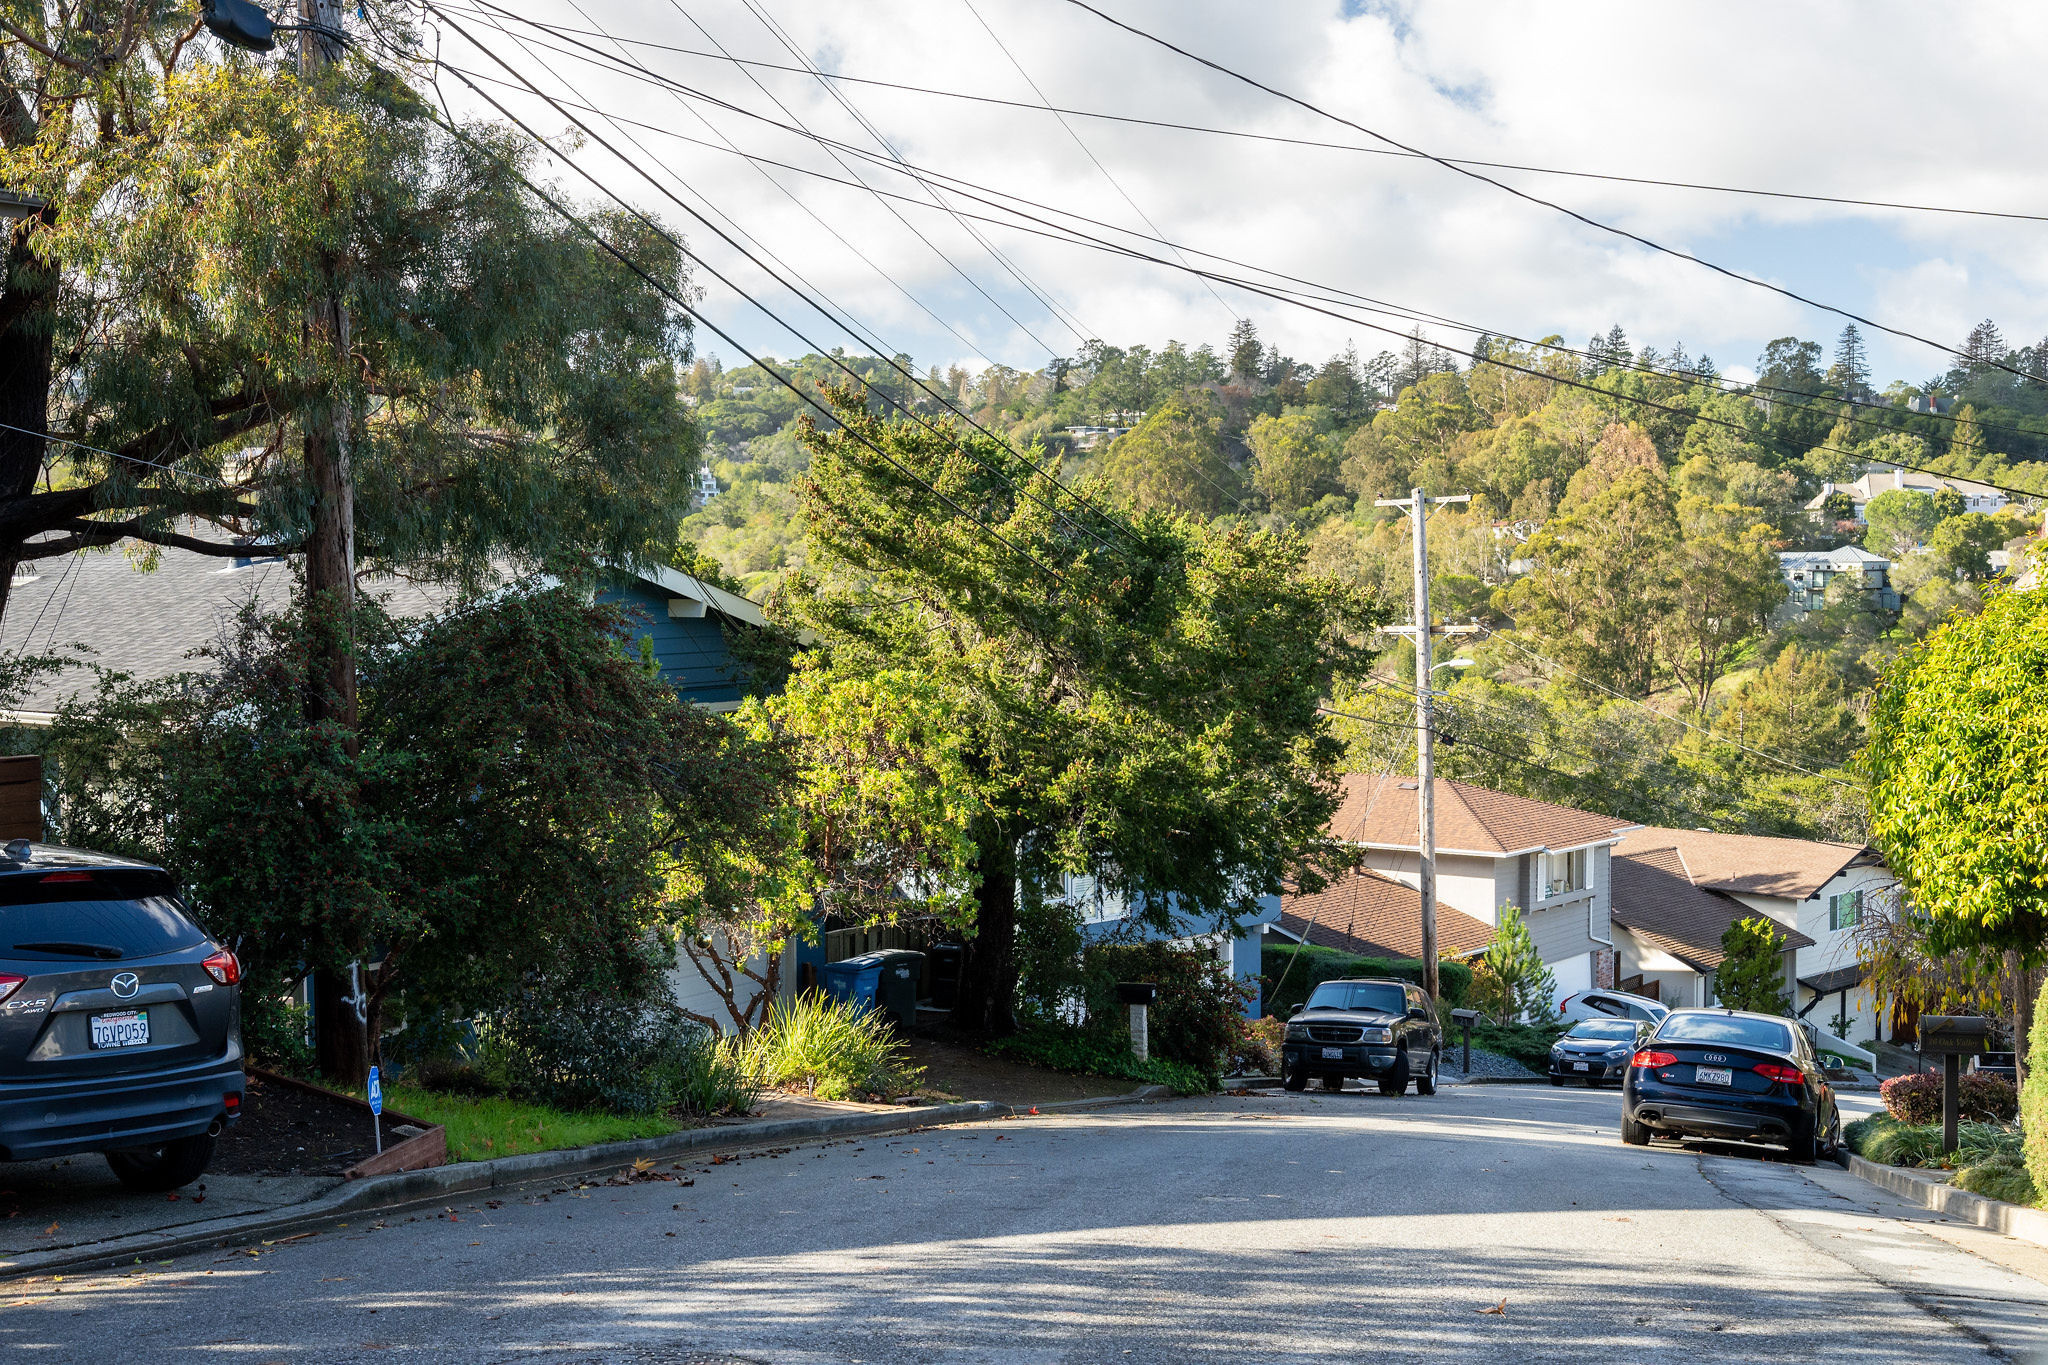 Baywood Knolls neighborhood hilltop view in San Mateo.